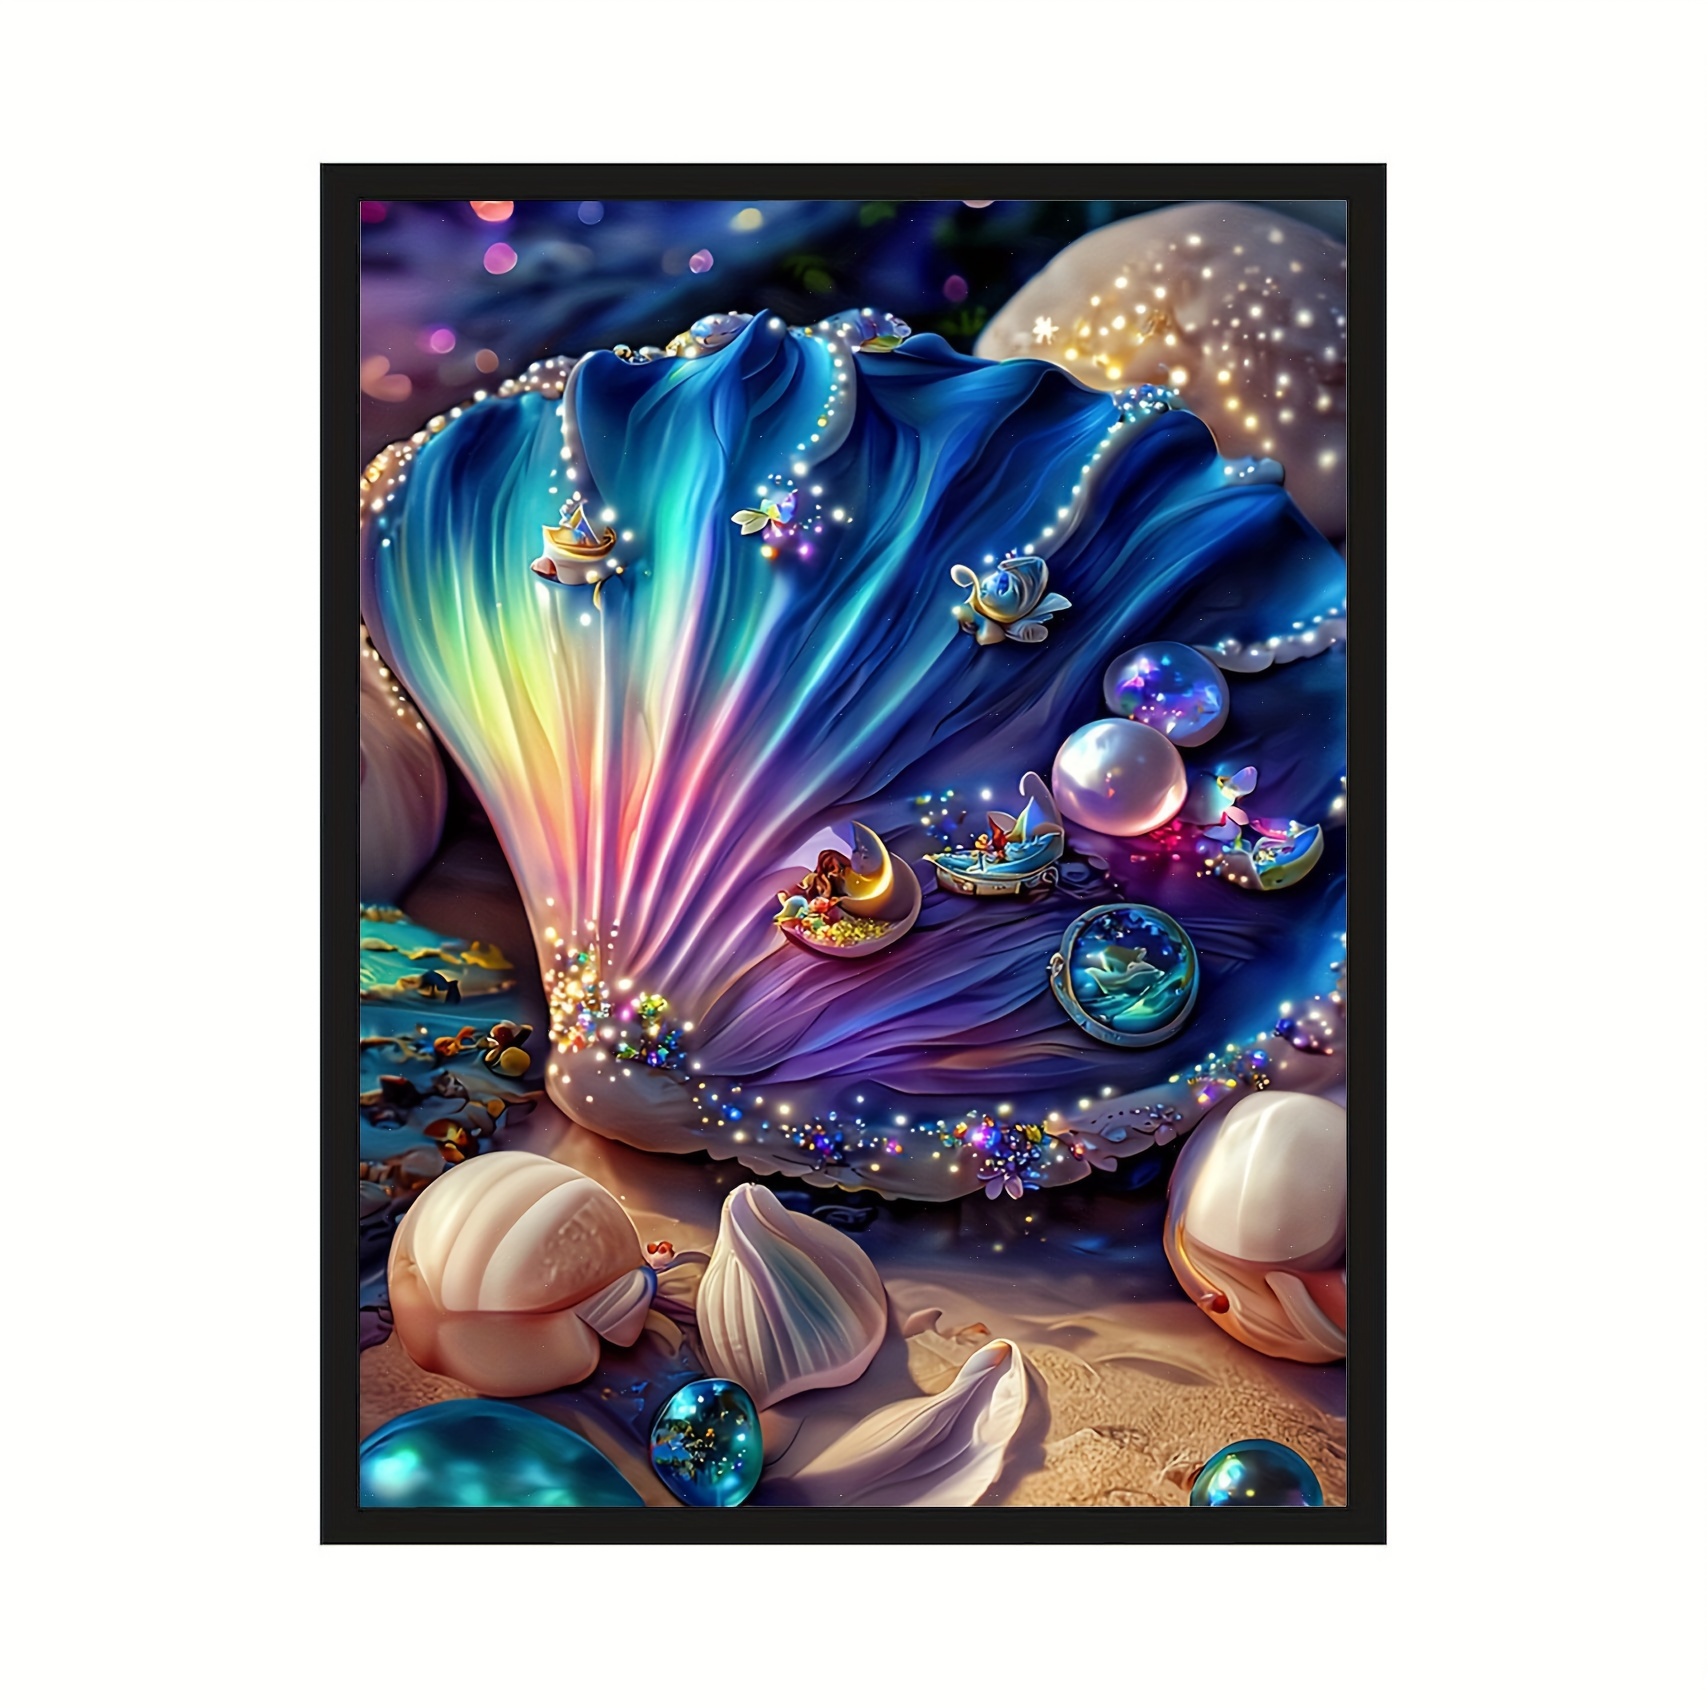 Mermaid 5D Diamond Painting Kit Square Round Gems Handmade Home